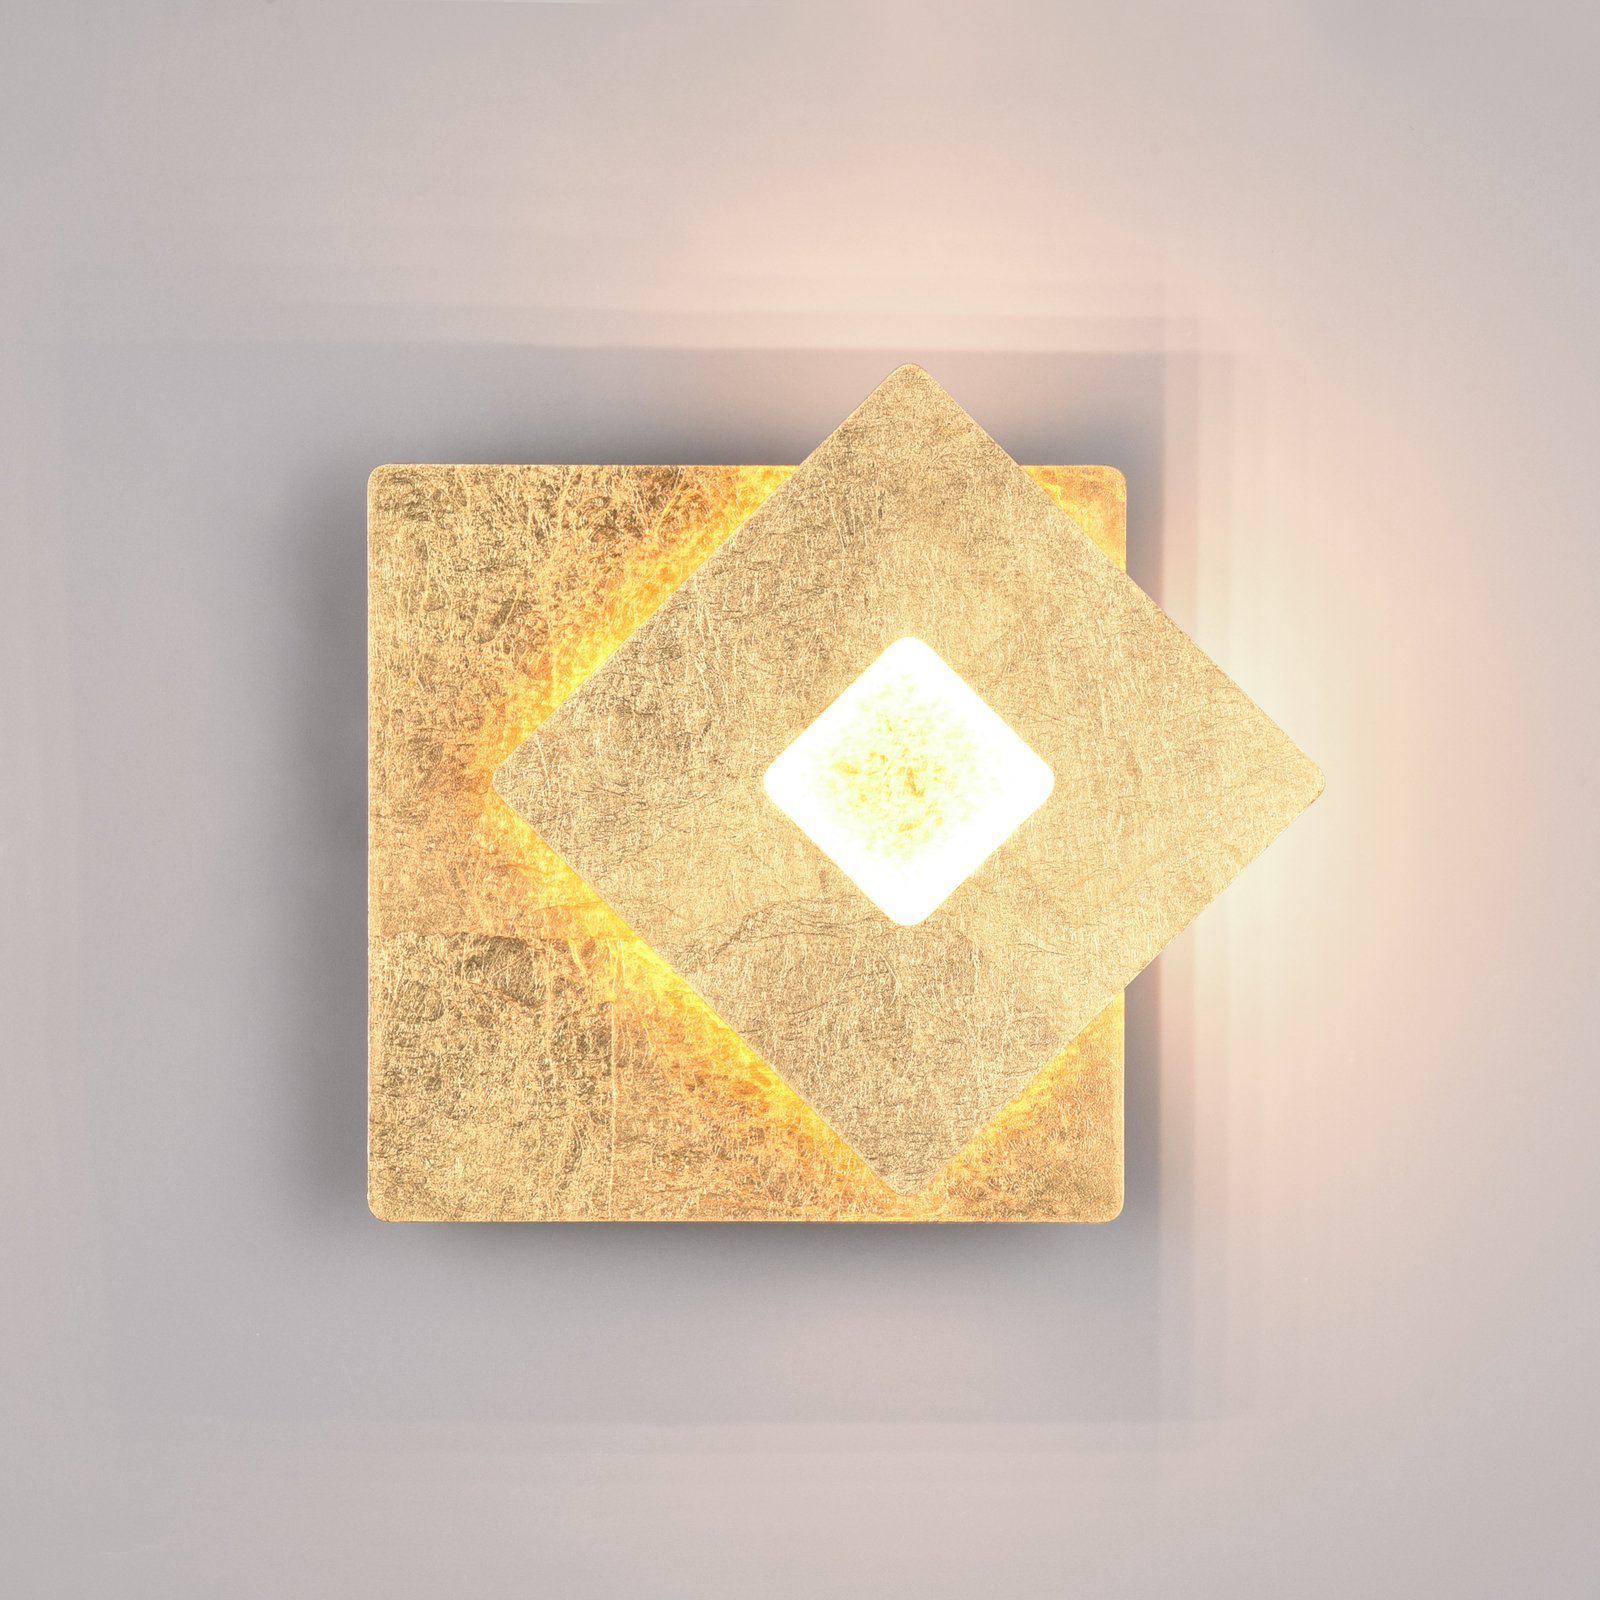 LED wall light Leano, angular shade, gold, indirect